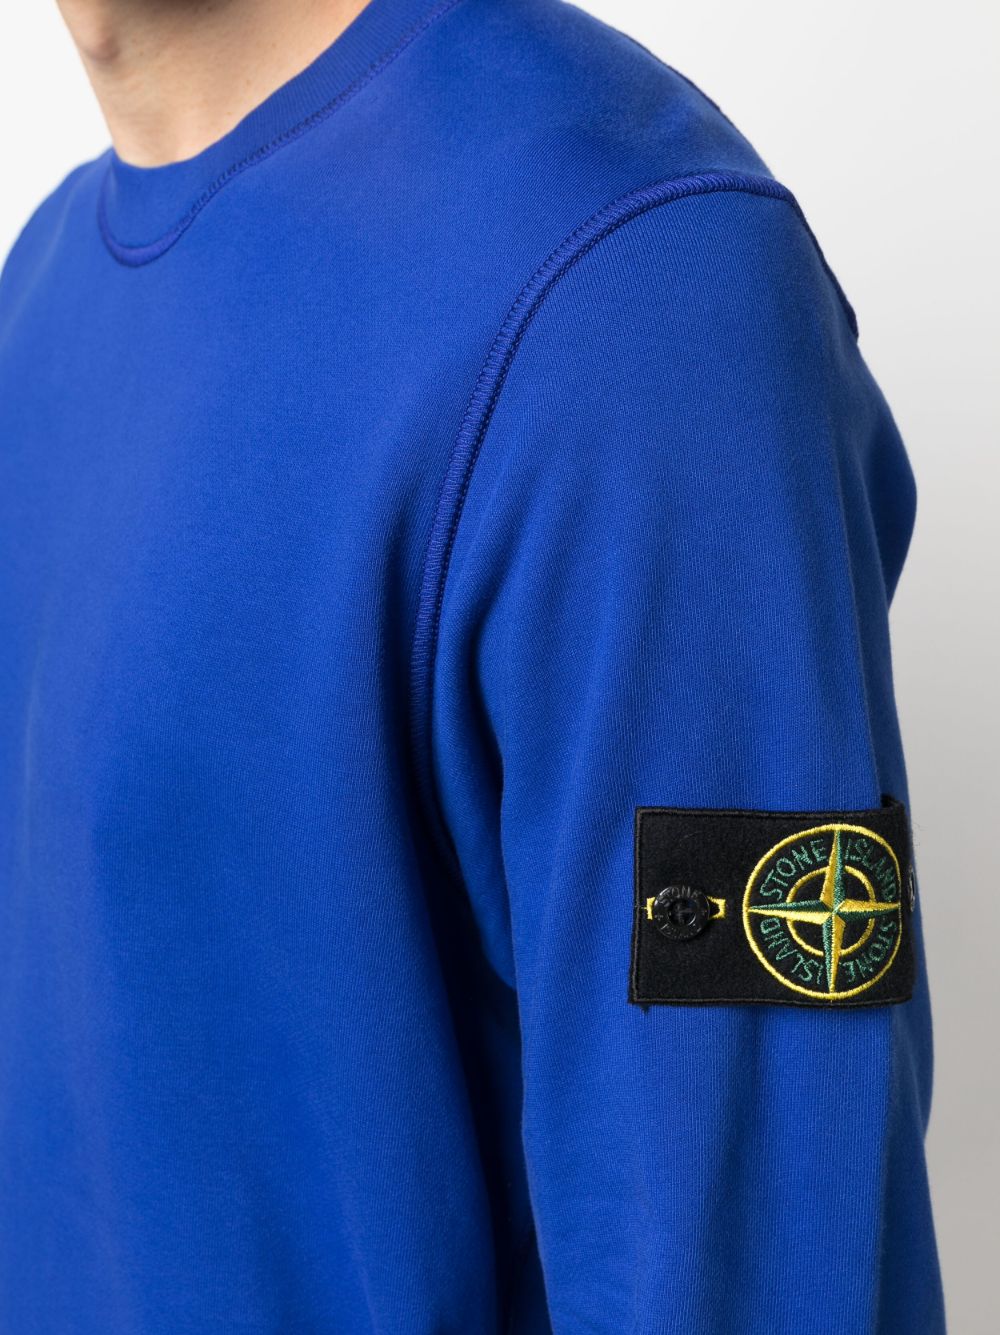 STONE ISLAND Compass Patch Logo Sweatshirt Royal Blue - MAISONDEFASHION.COM